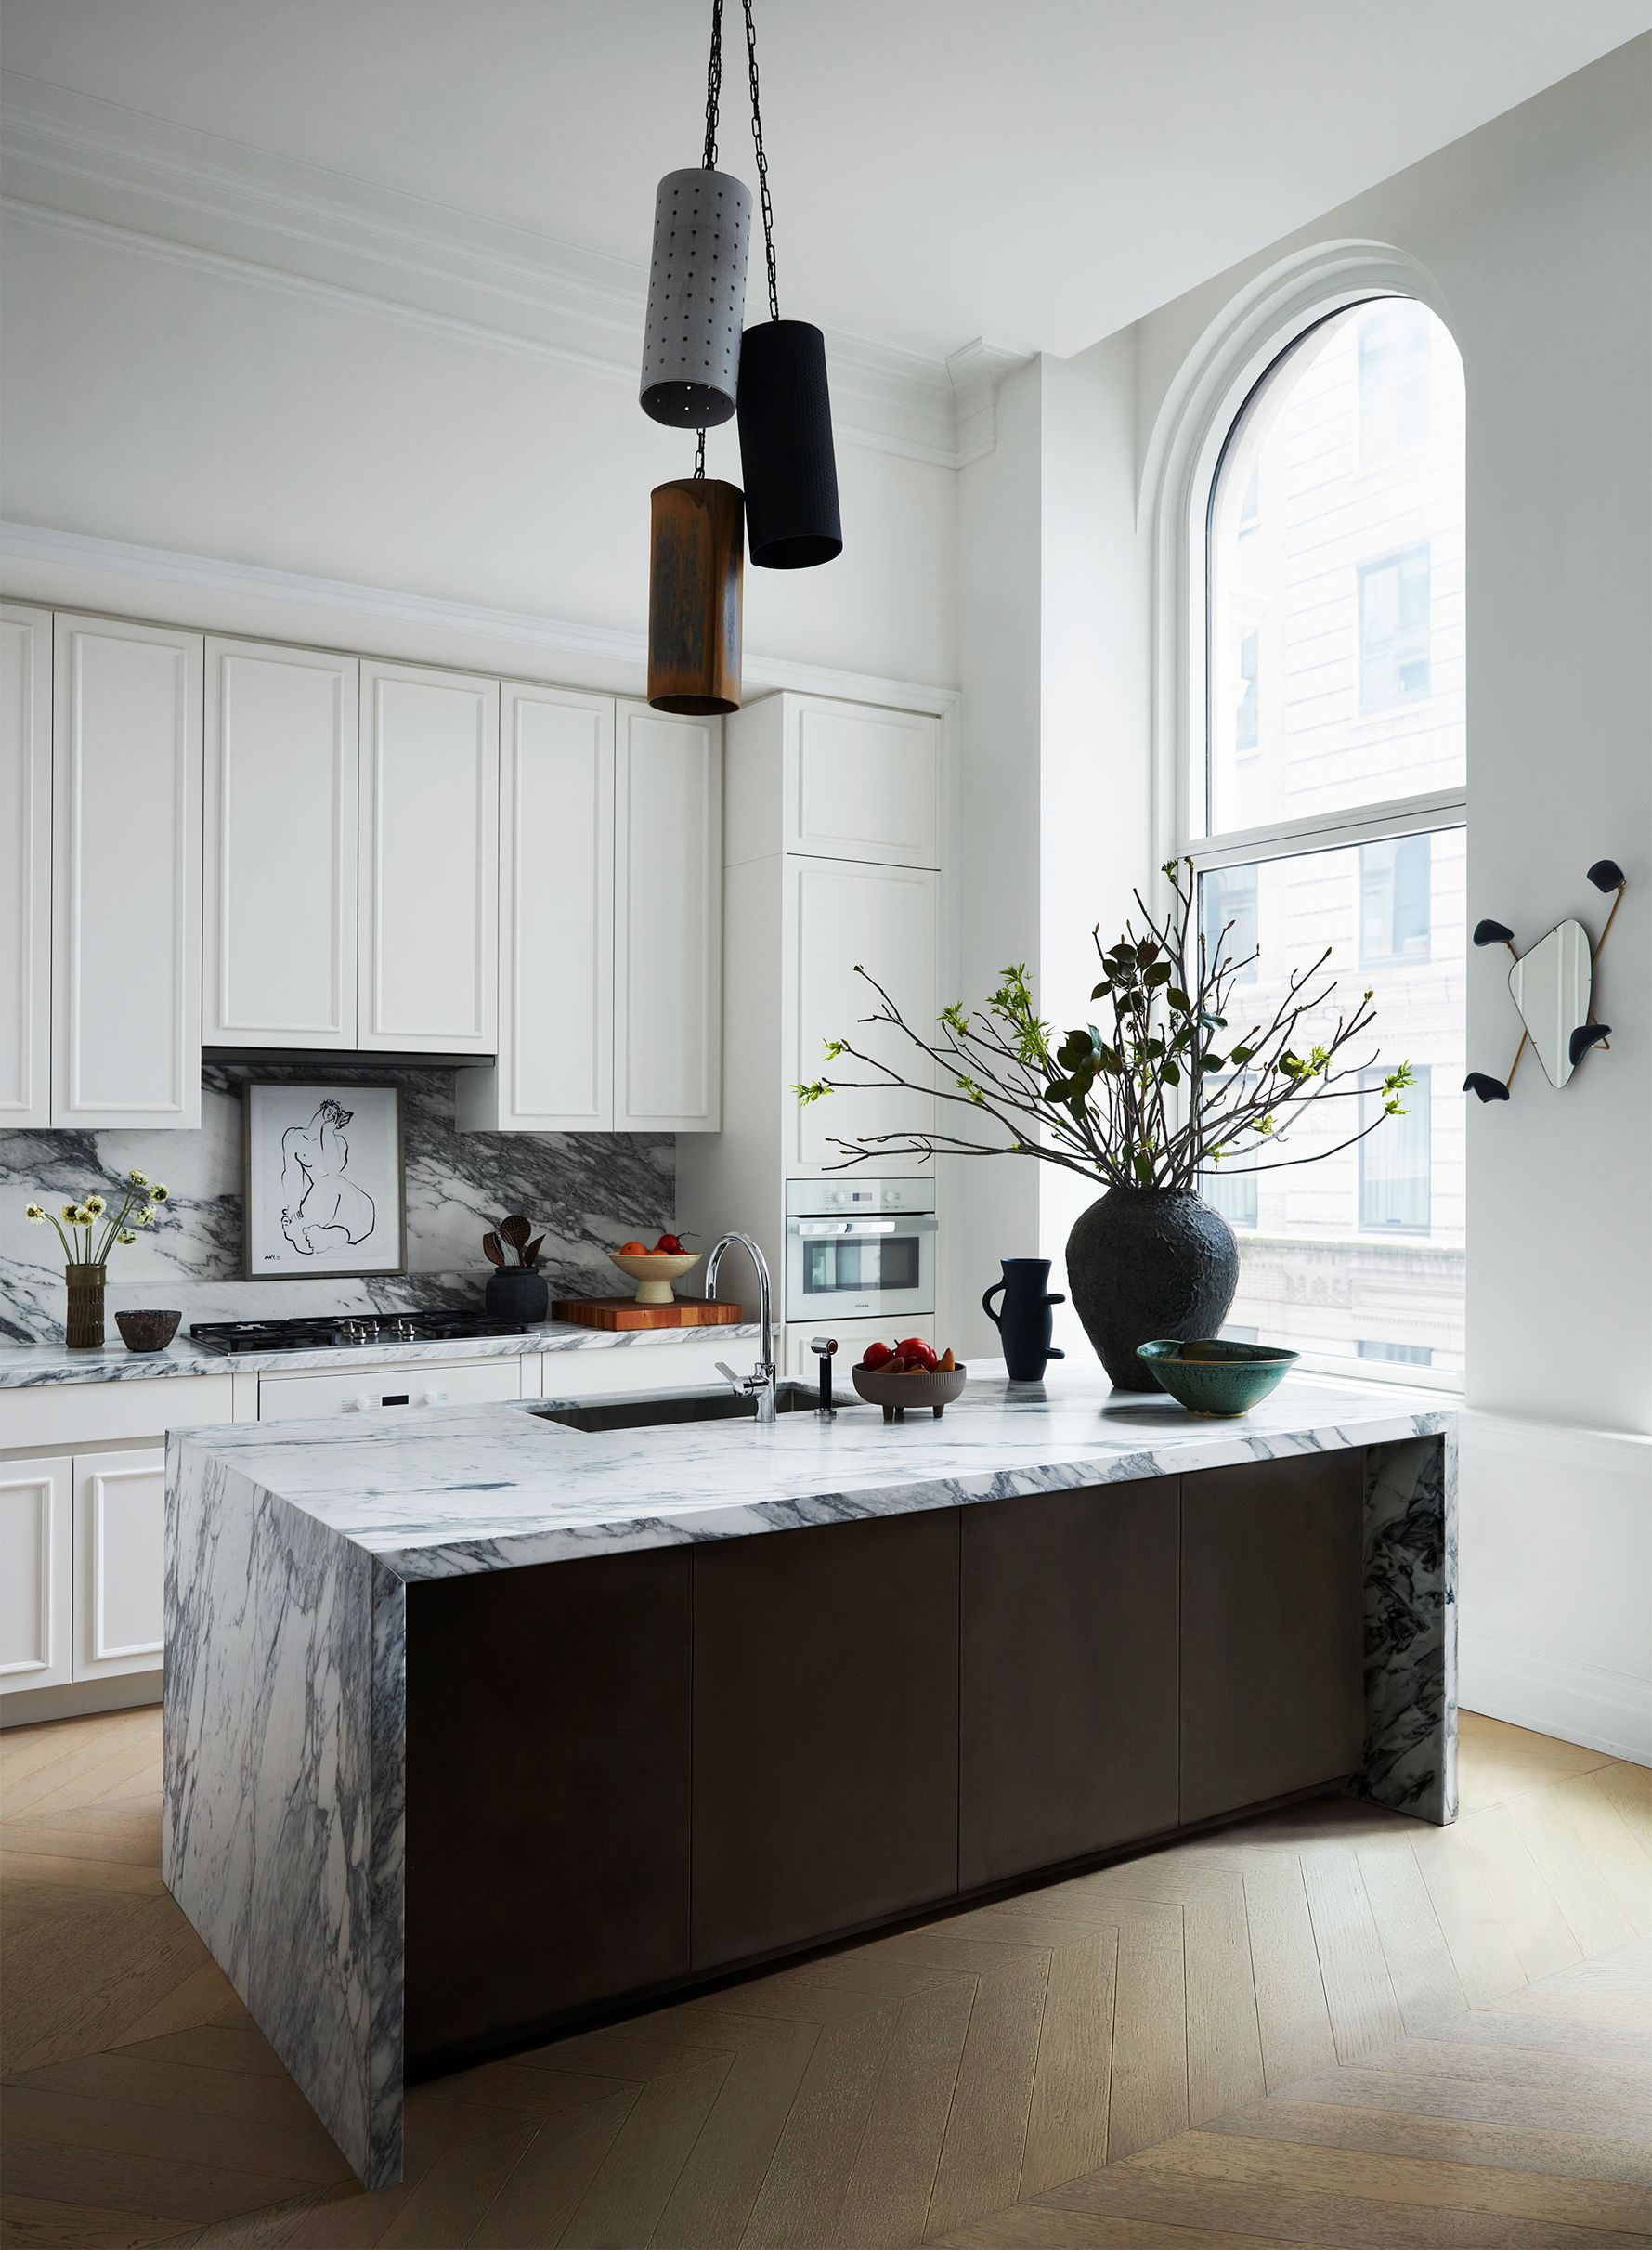 18 Stylish White Kitchen Appliance Ideas for Any Kitchen